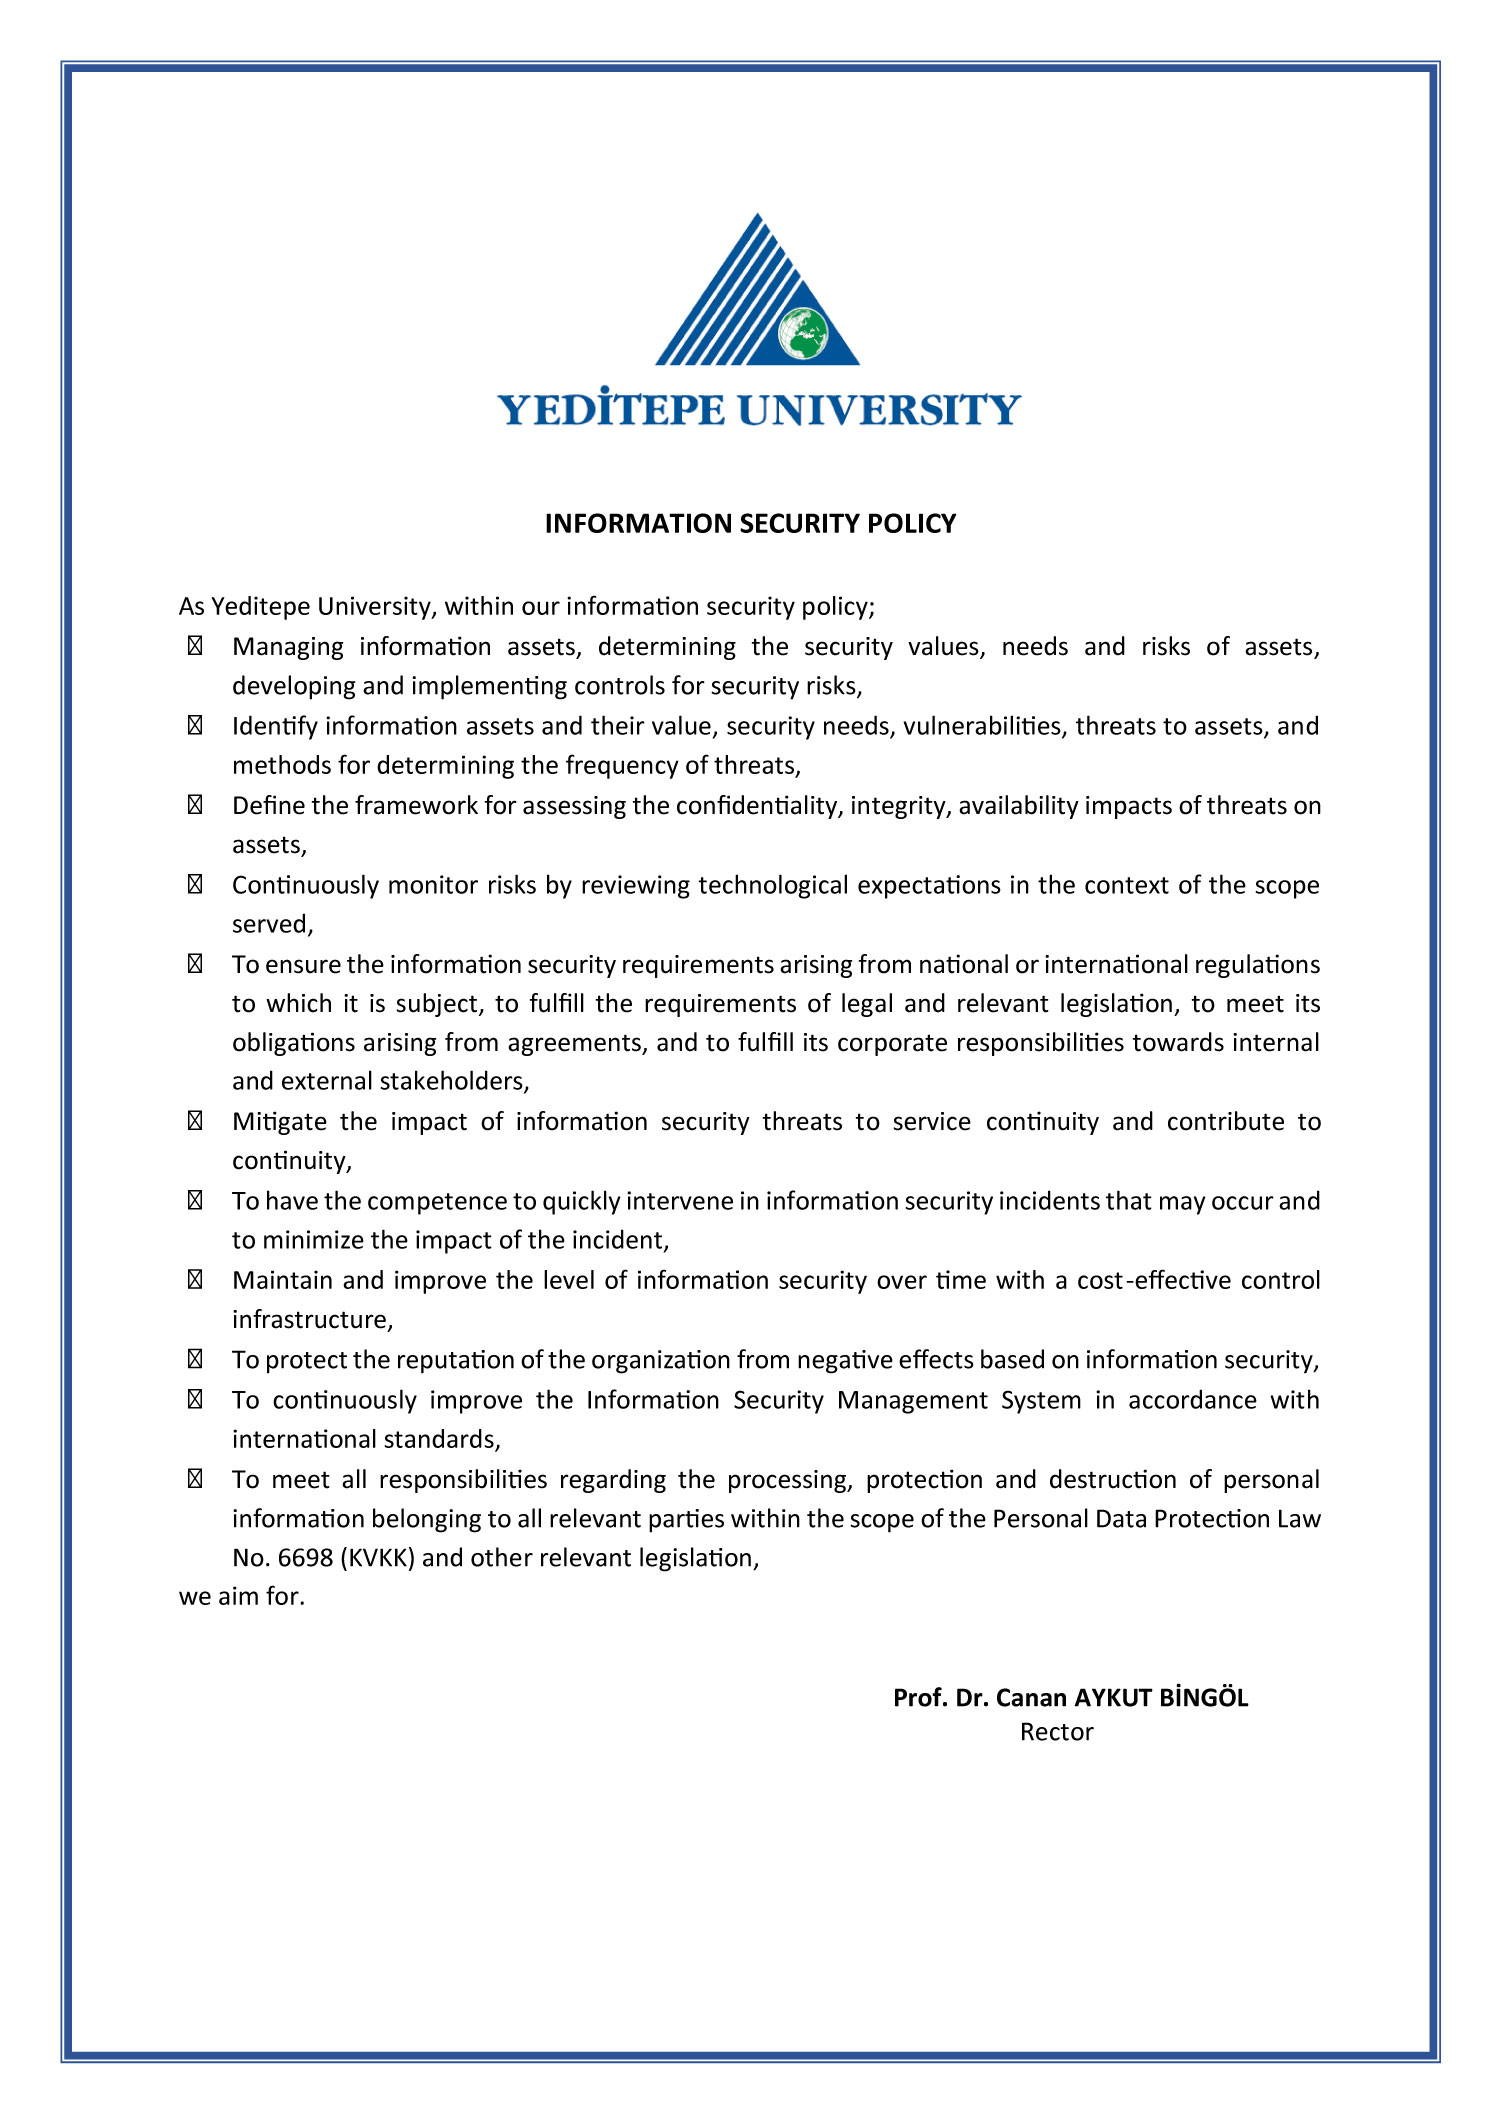 Information Security Policy - Yeditepe University